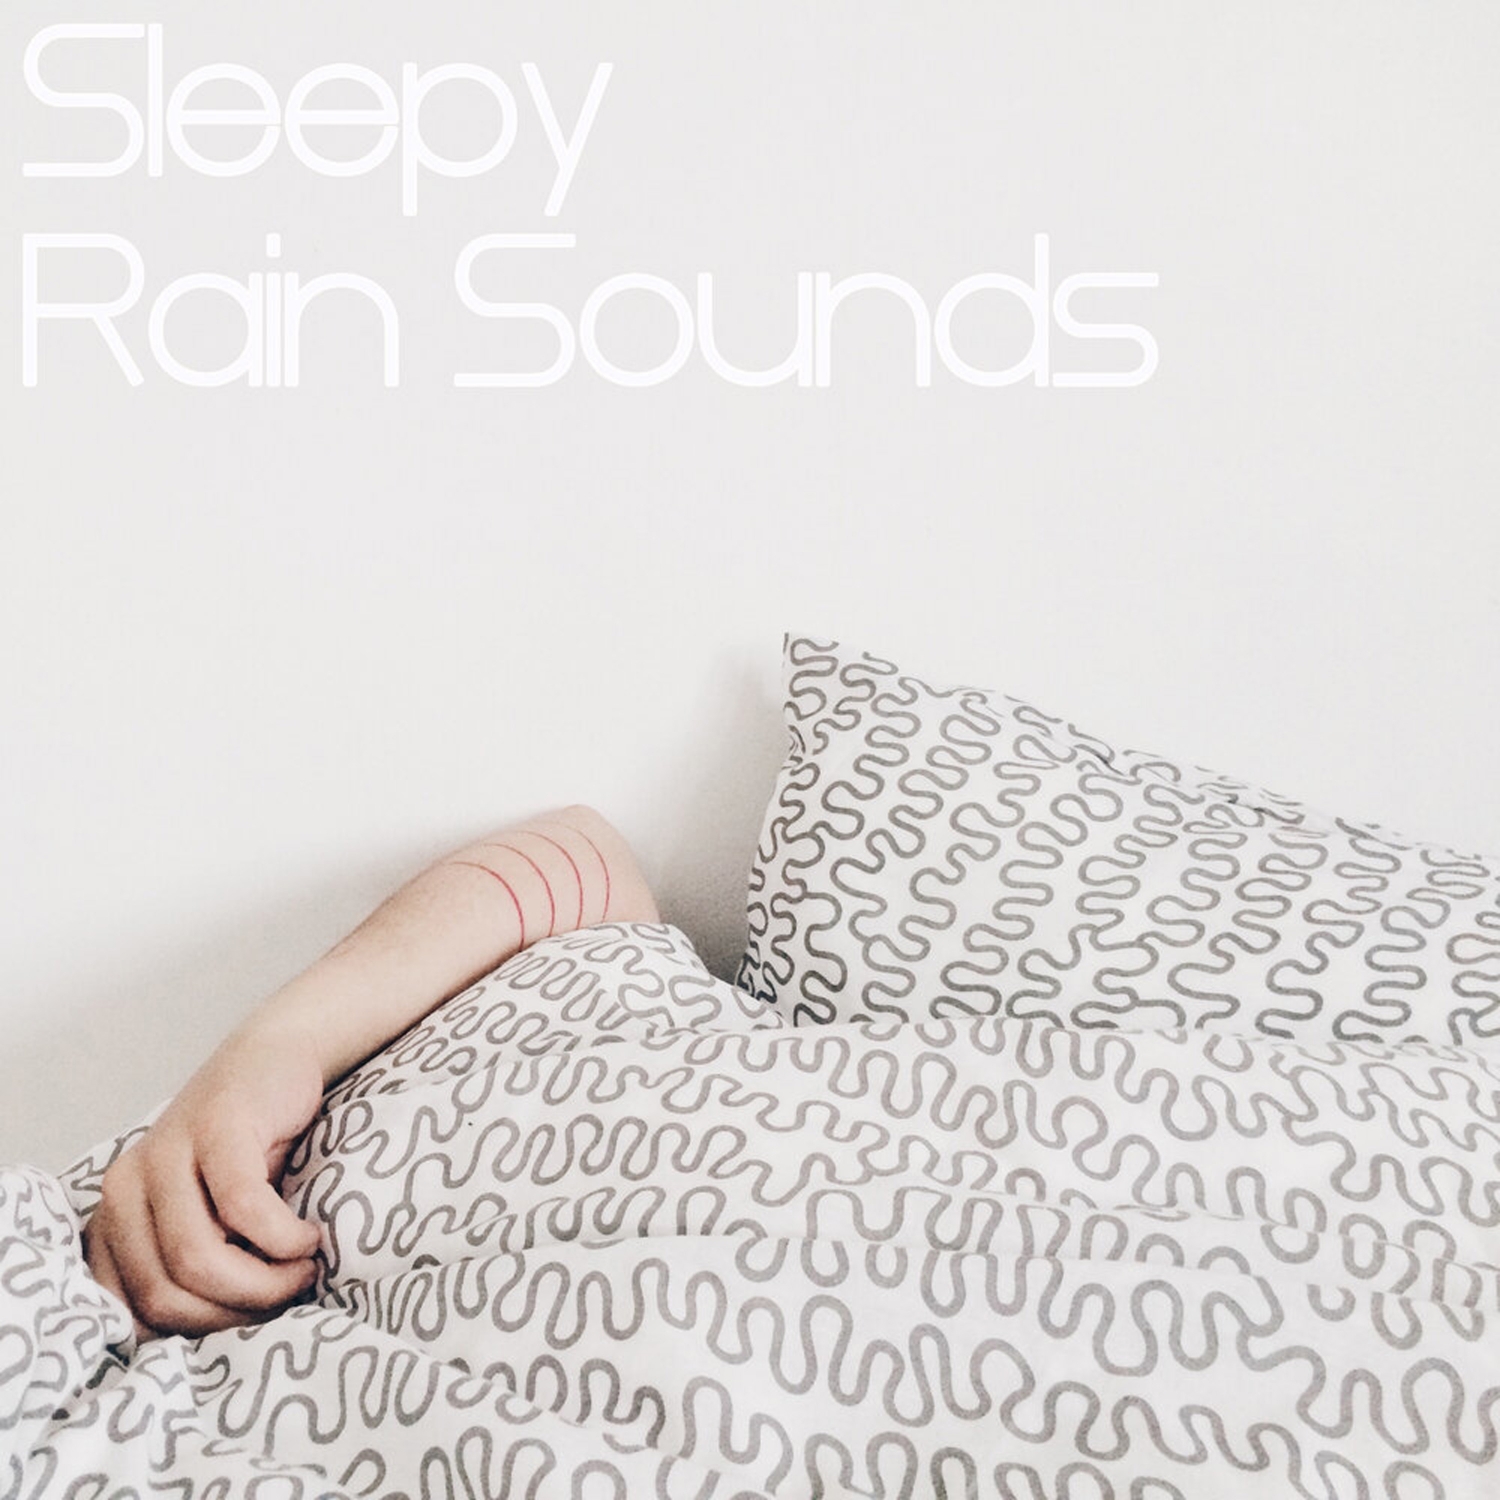 10 Sleepy Rain Sounds - Sleep in the Great Outdoors under the Stars in the Rain